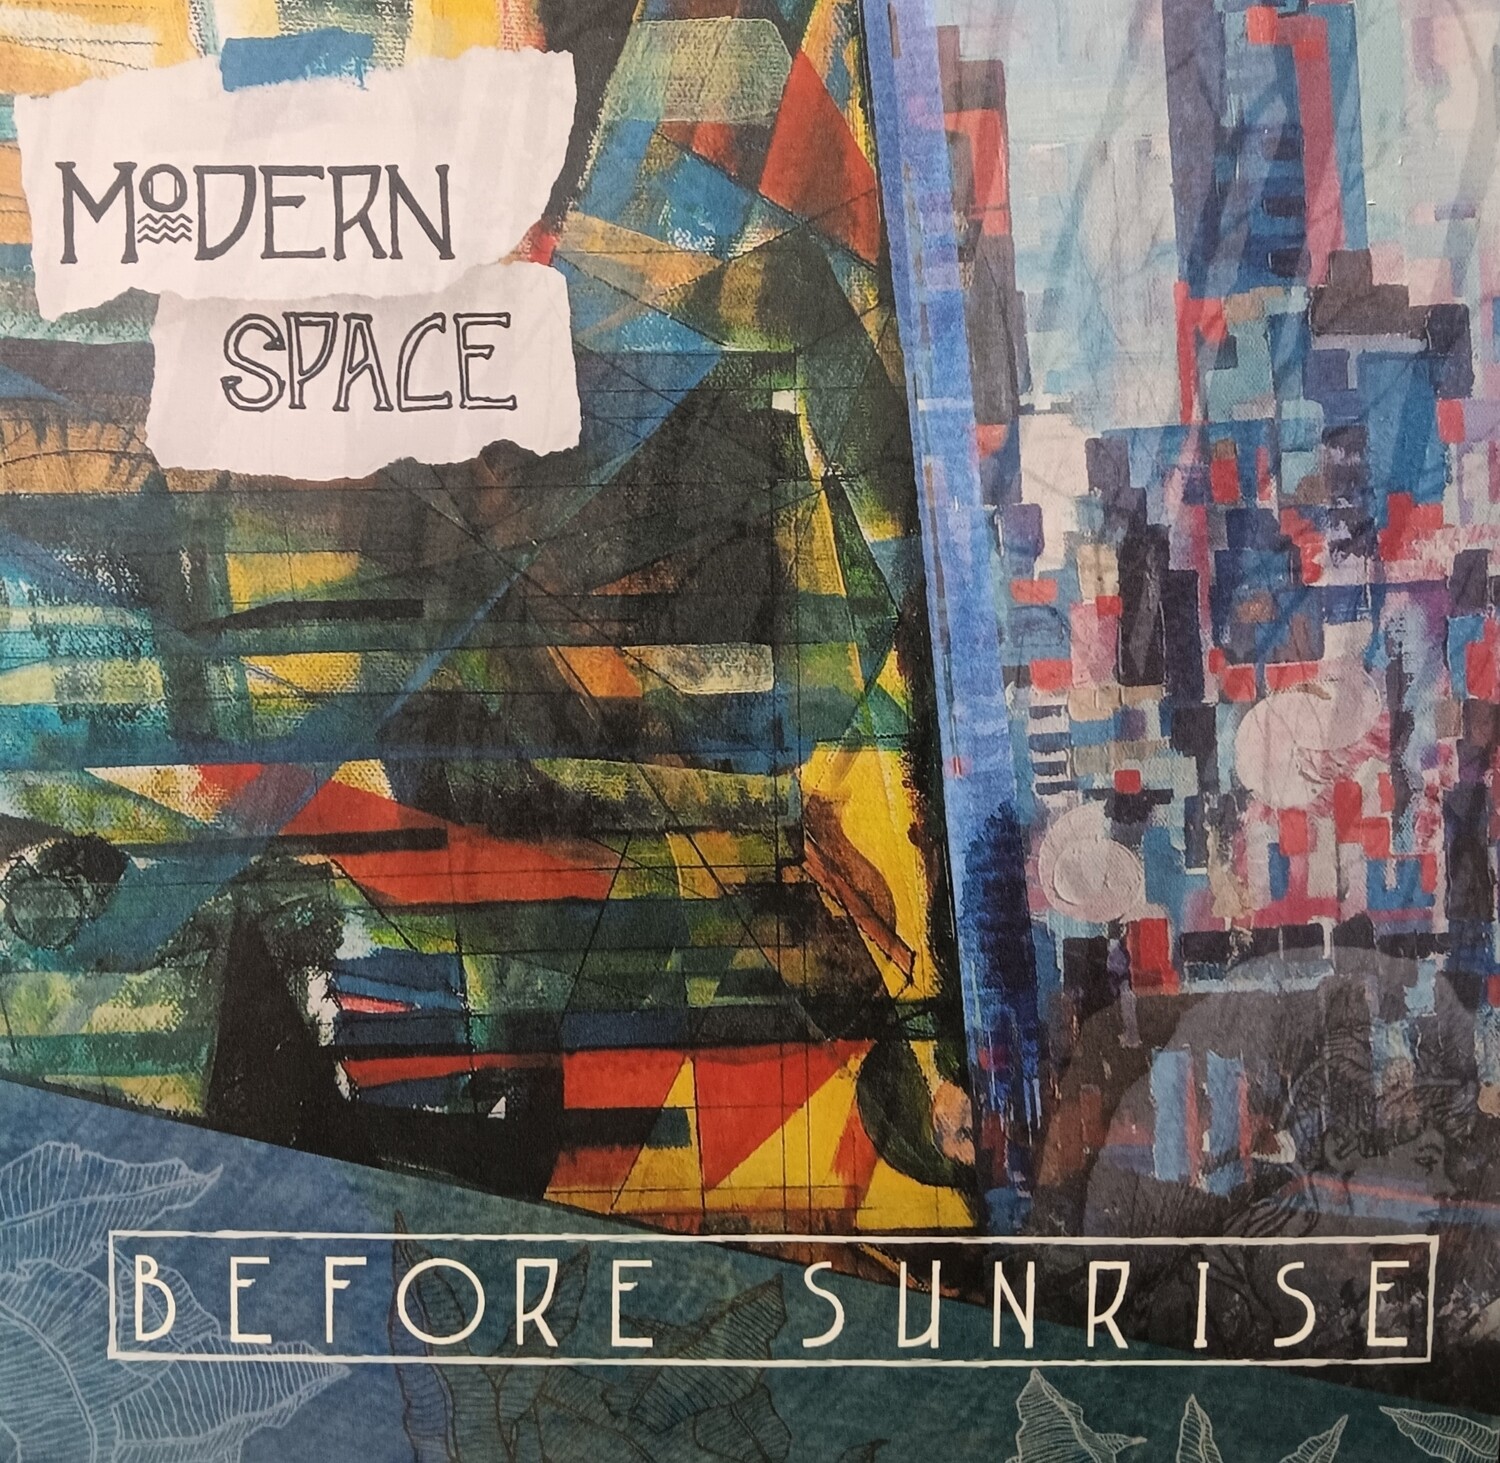 MODERN SPACE - Before sunrise